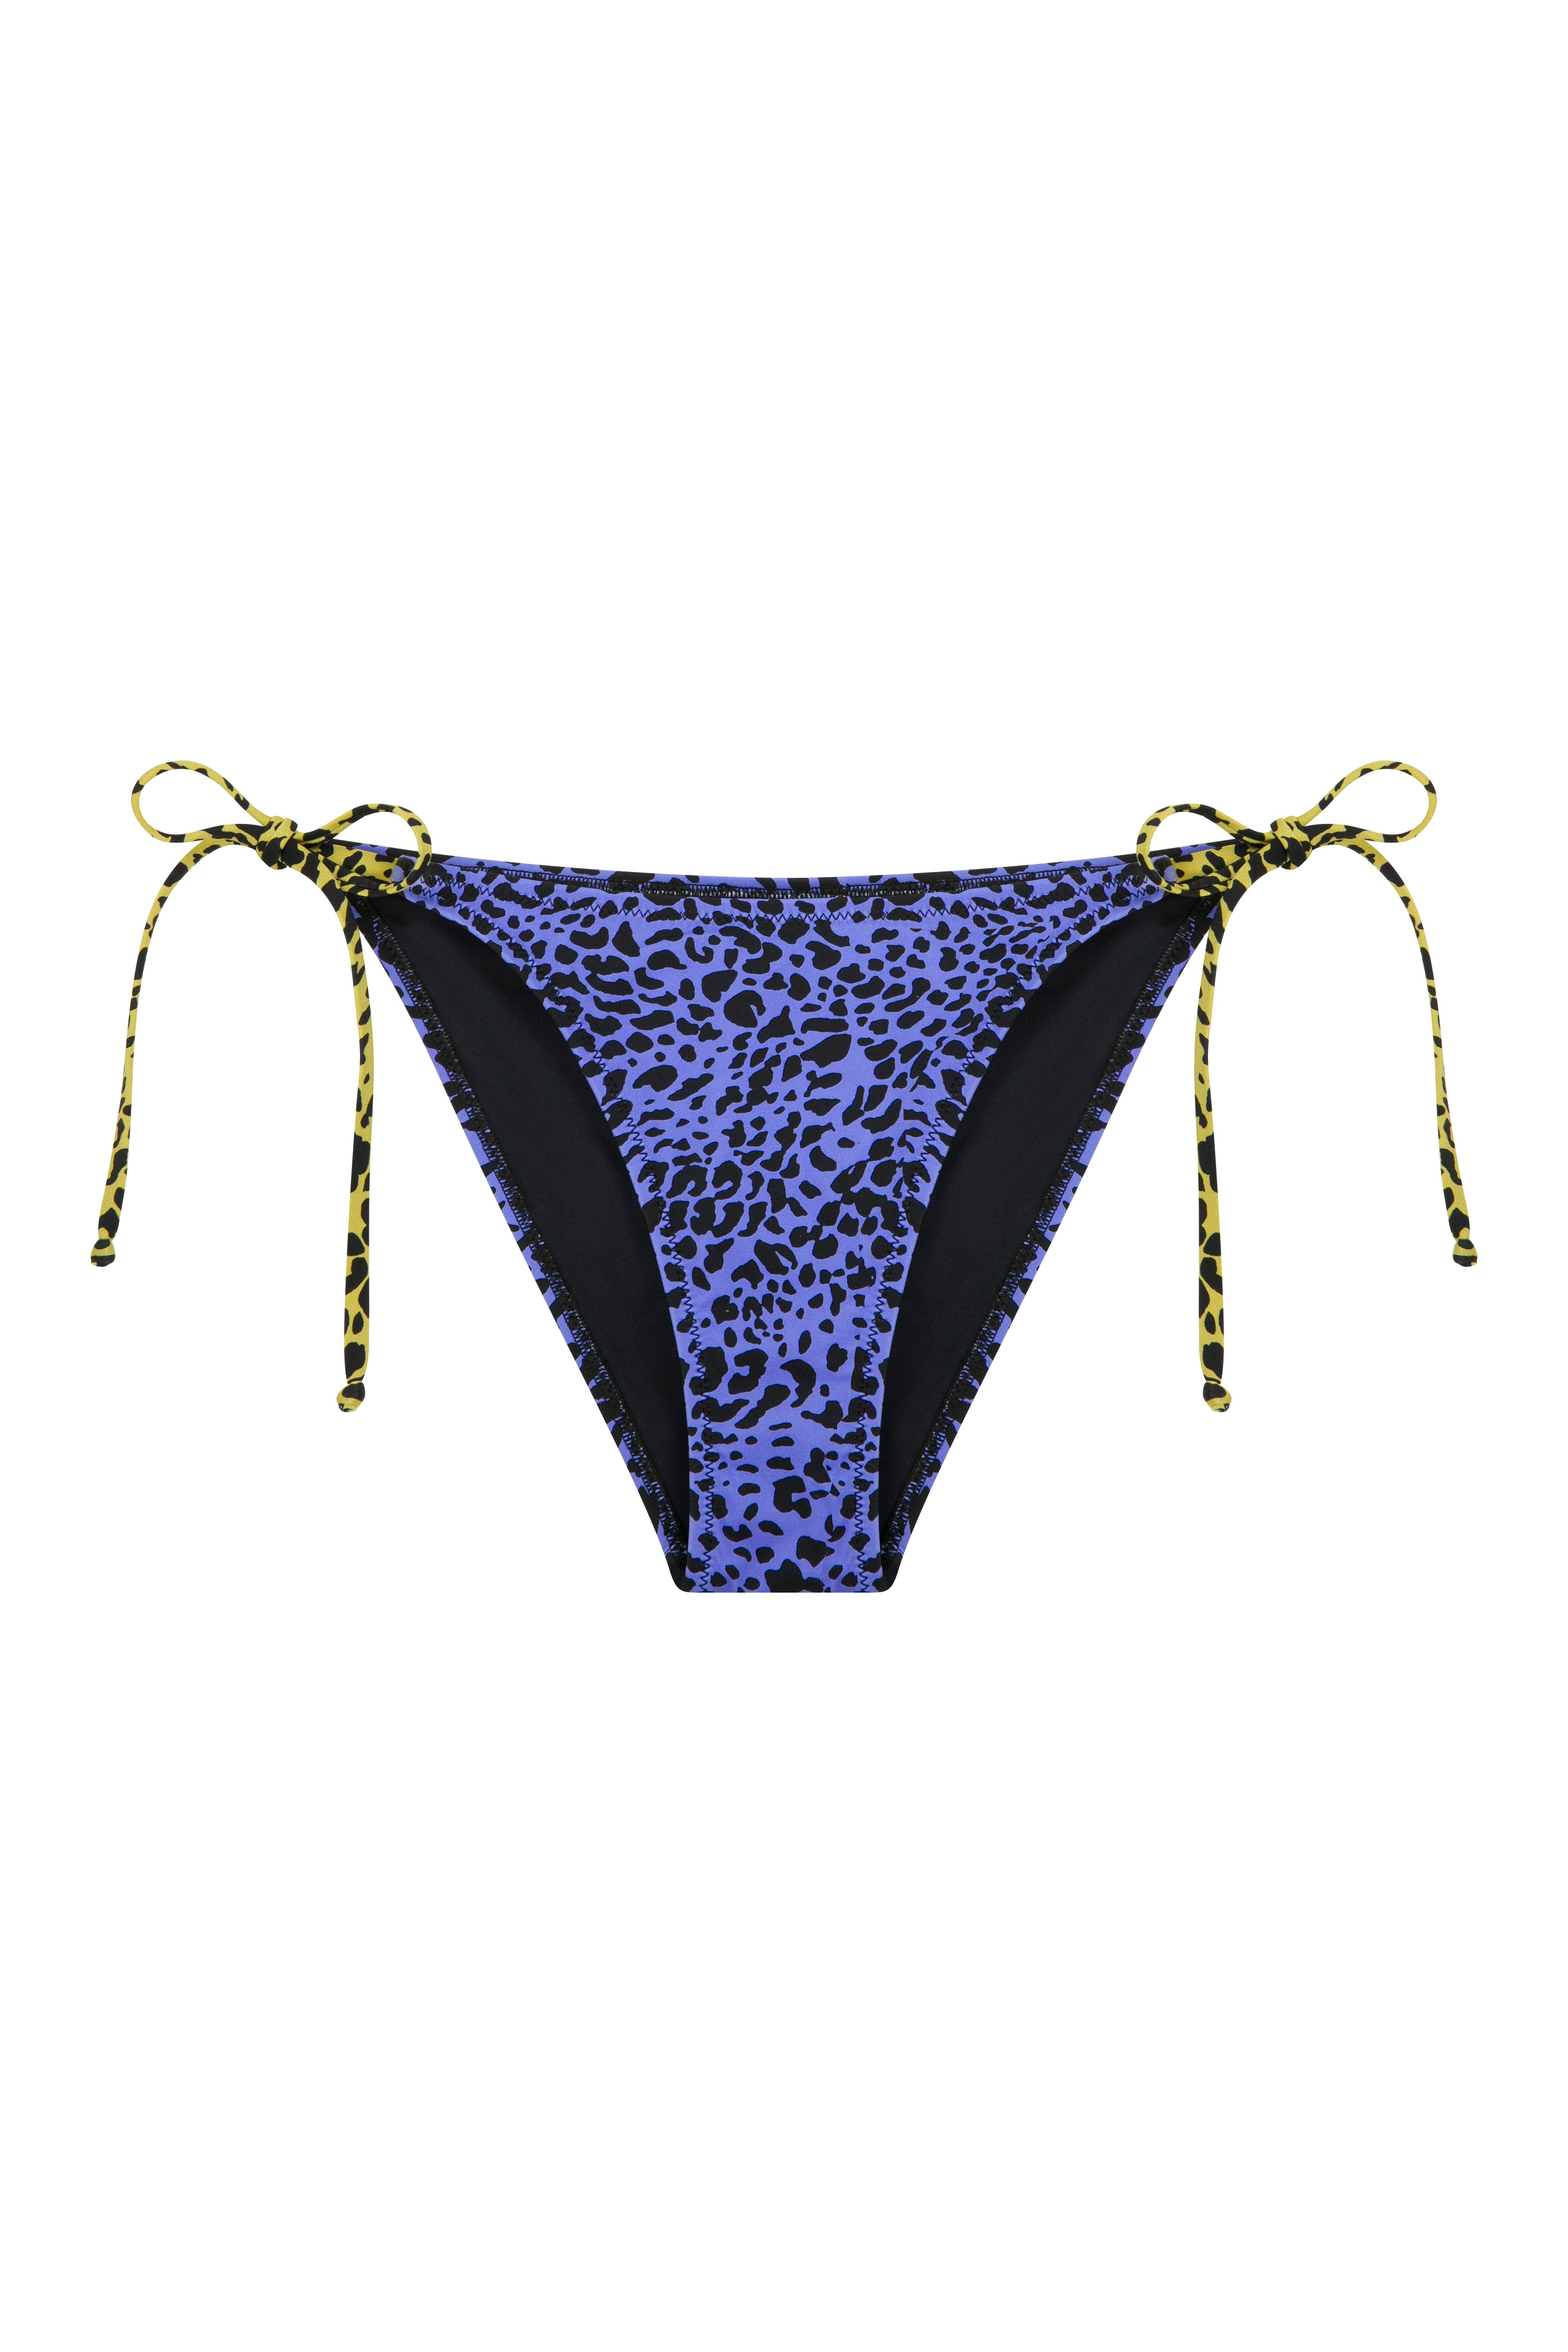 Buy Victoria's Secret Cosmo Shine Strap Bikini Bottom from Next Gibraltar